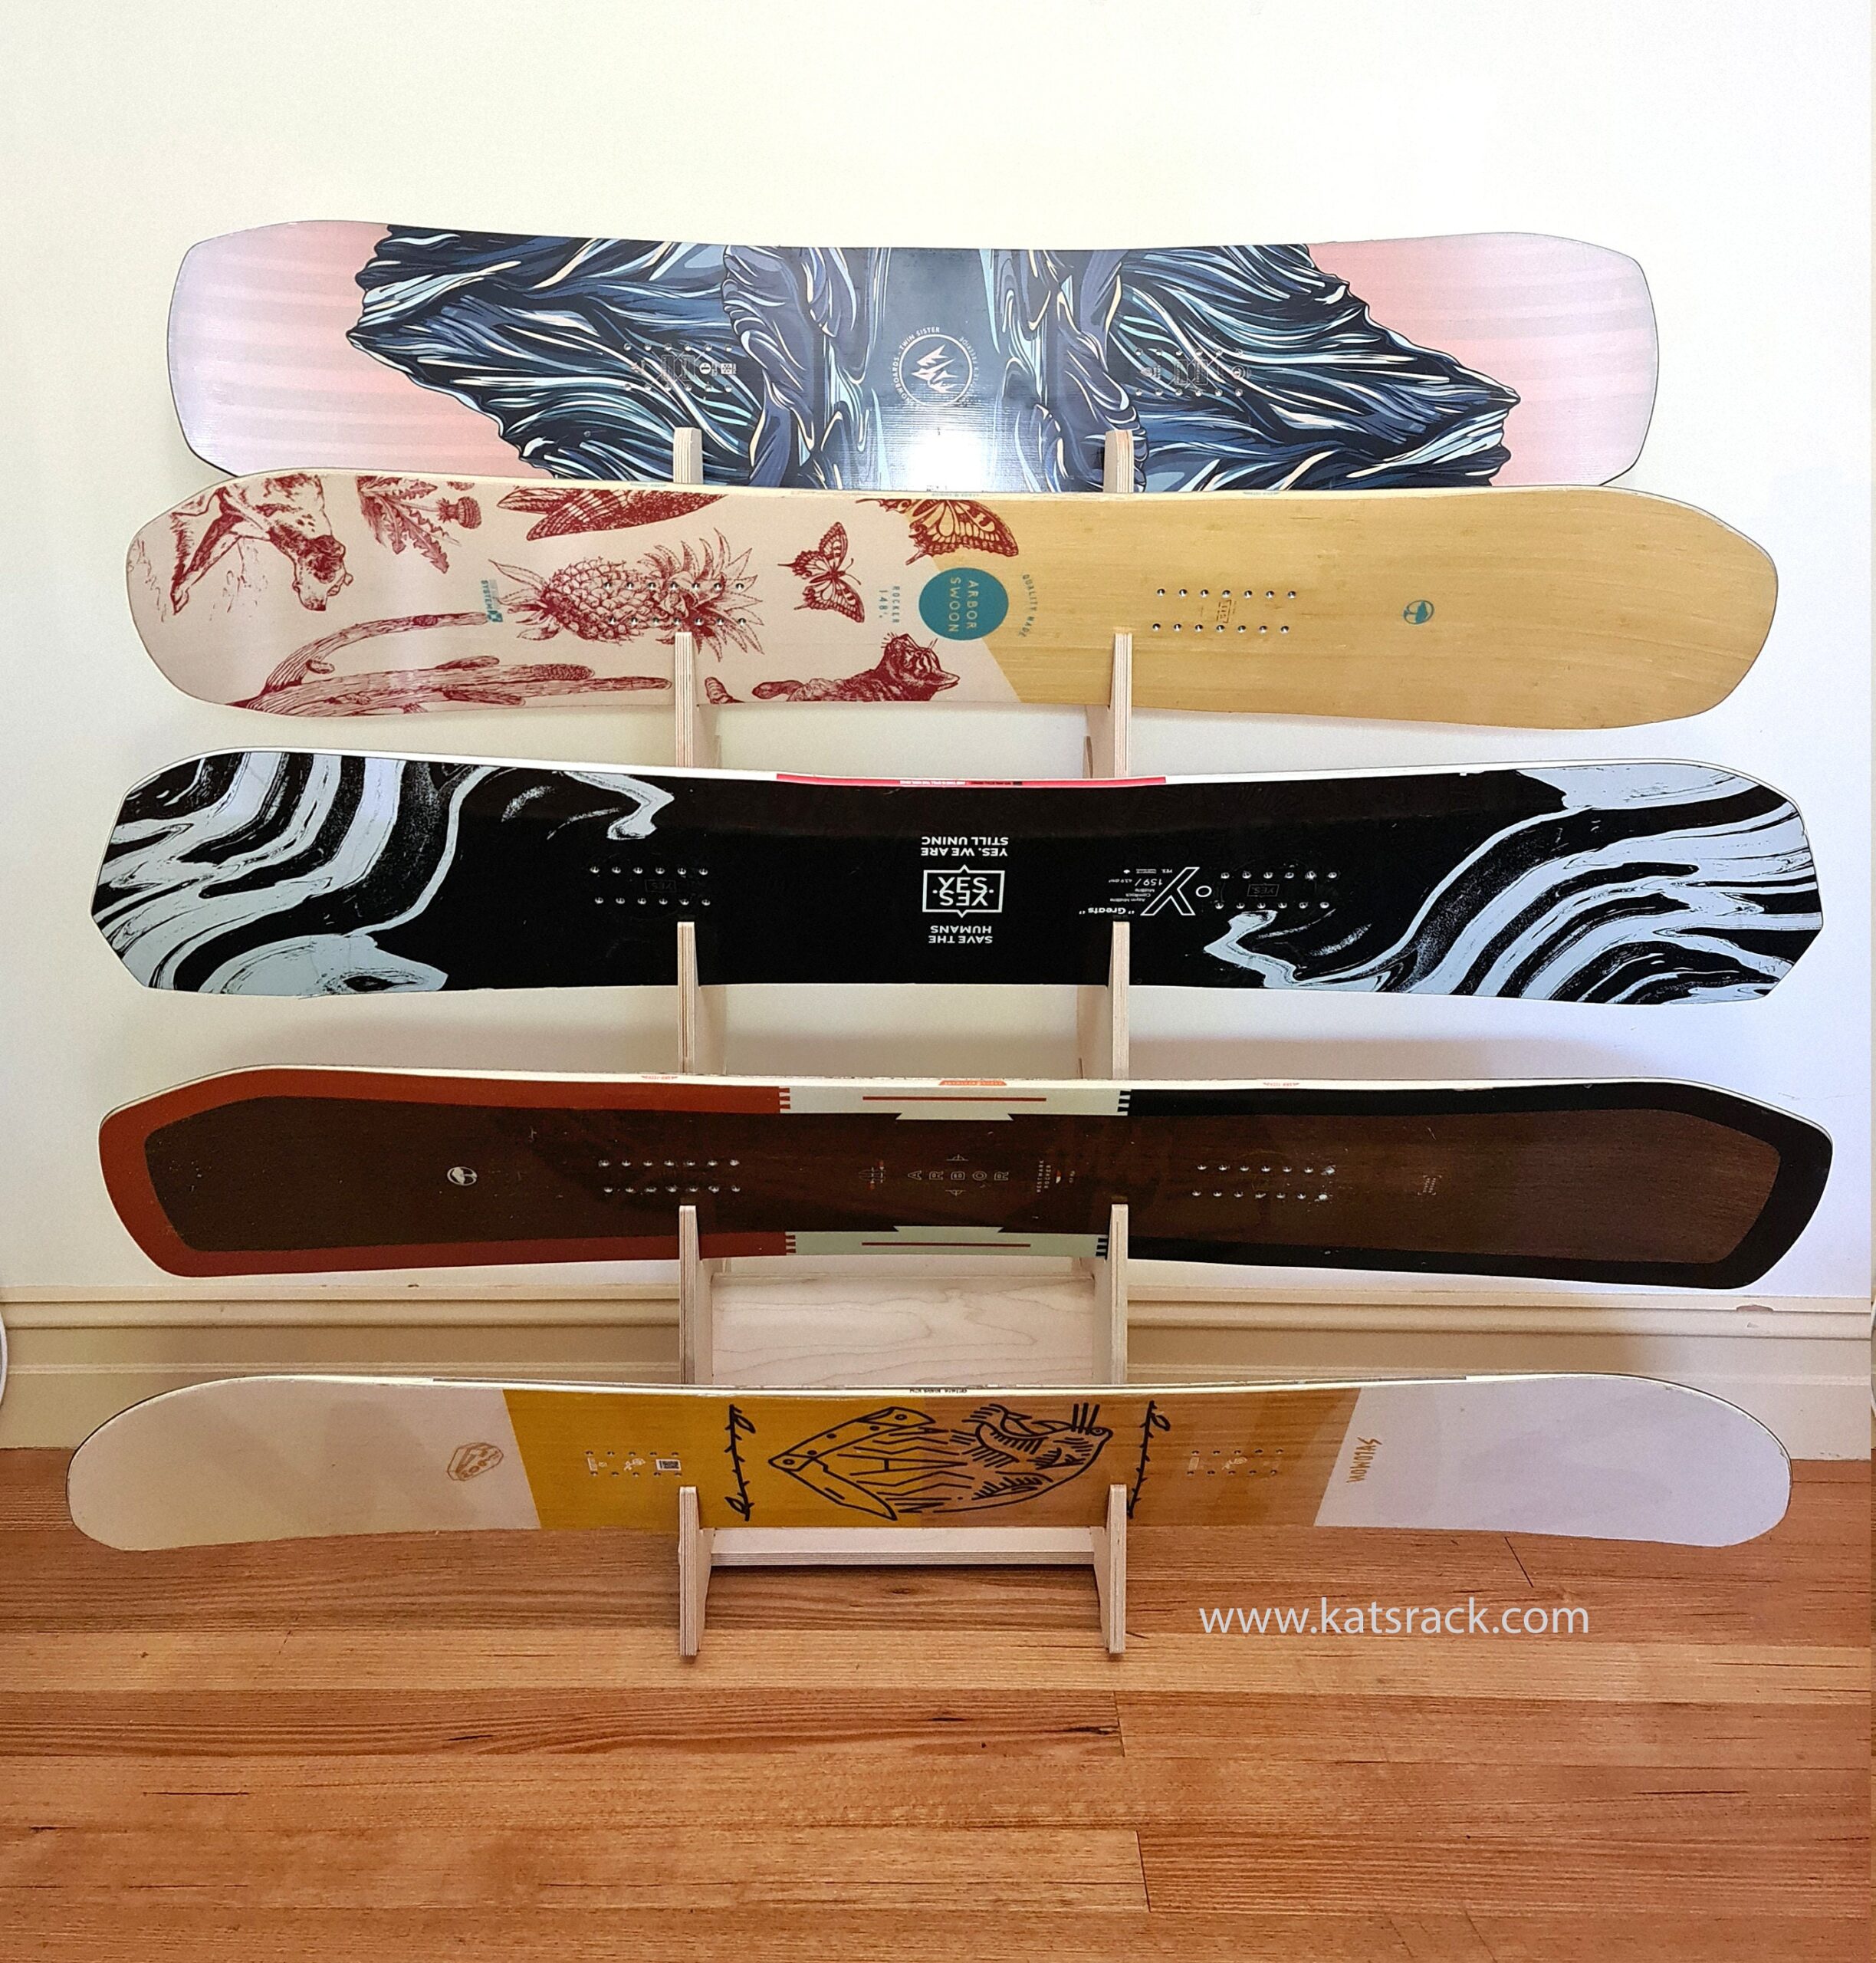 5 Board (9 slots) 1.2m Display Skateboard Rack - Freestanding for Snowboard, Wakeboard, Longboard, Kitesurf boards